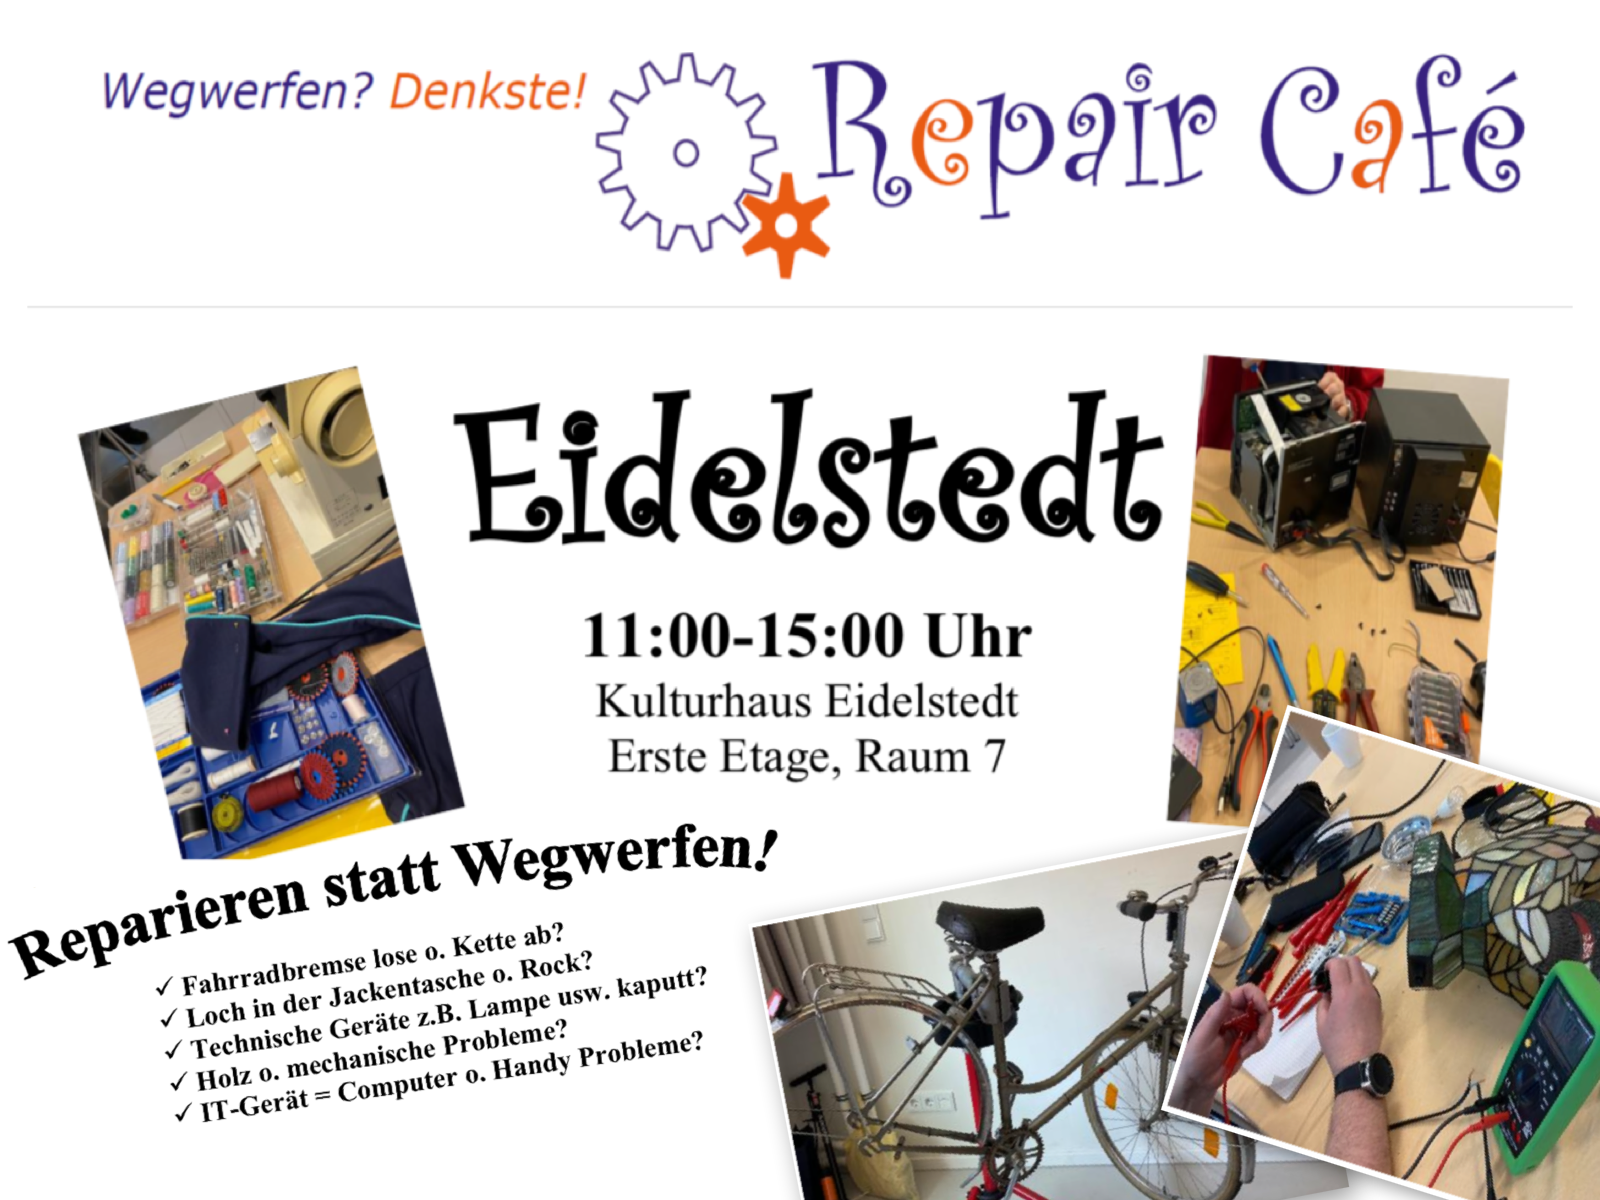 Repair Café in Eidelstedt